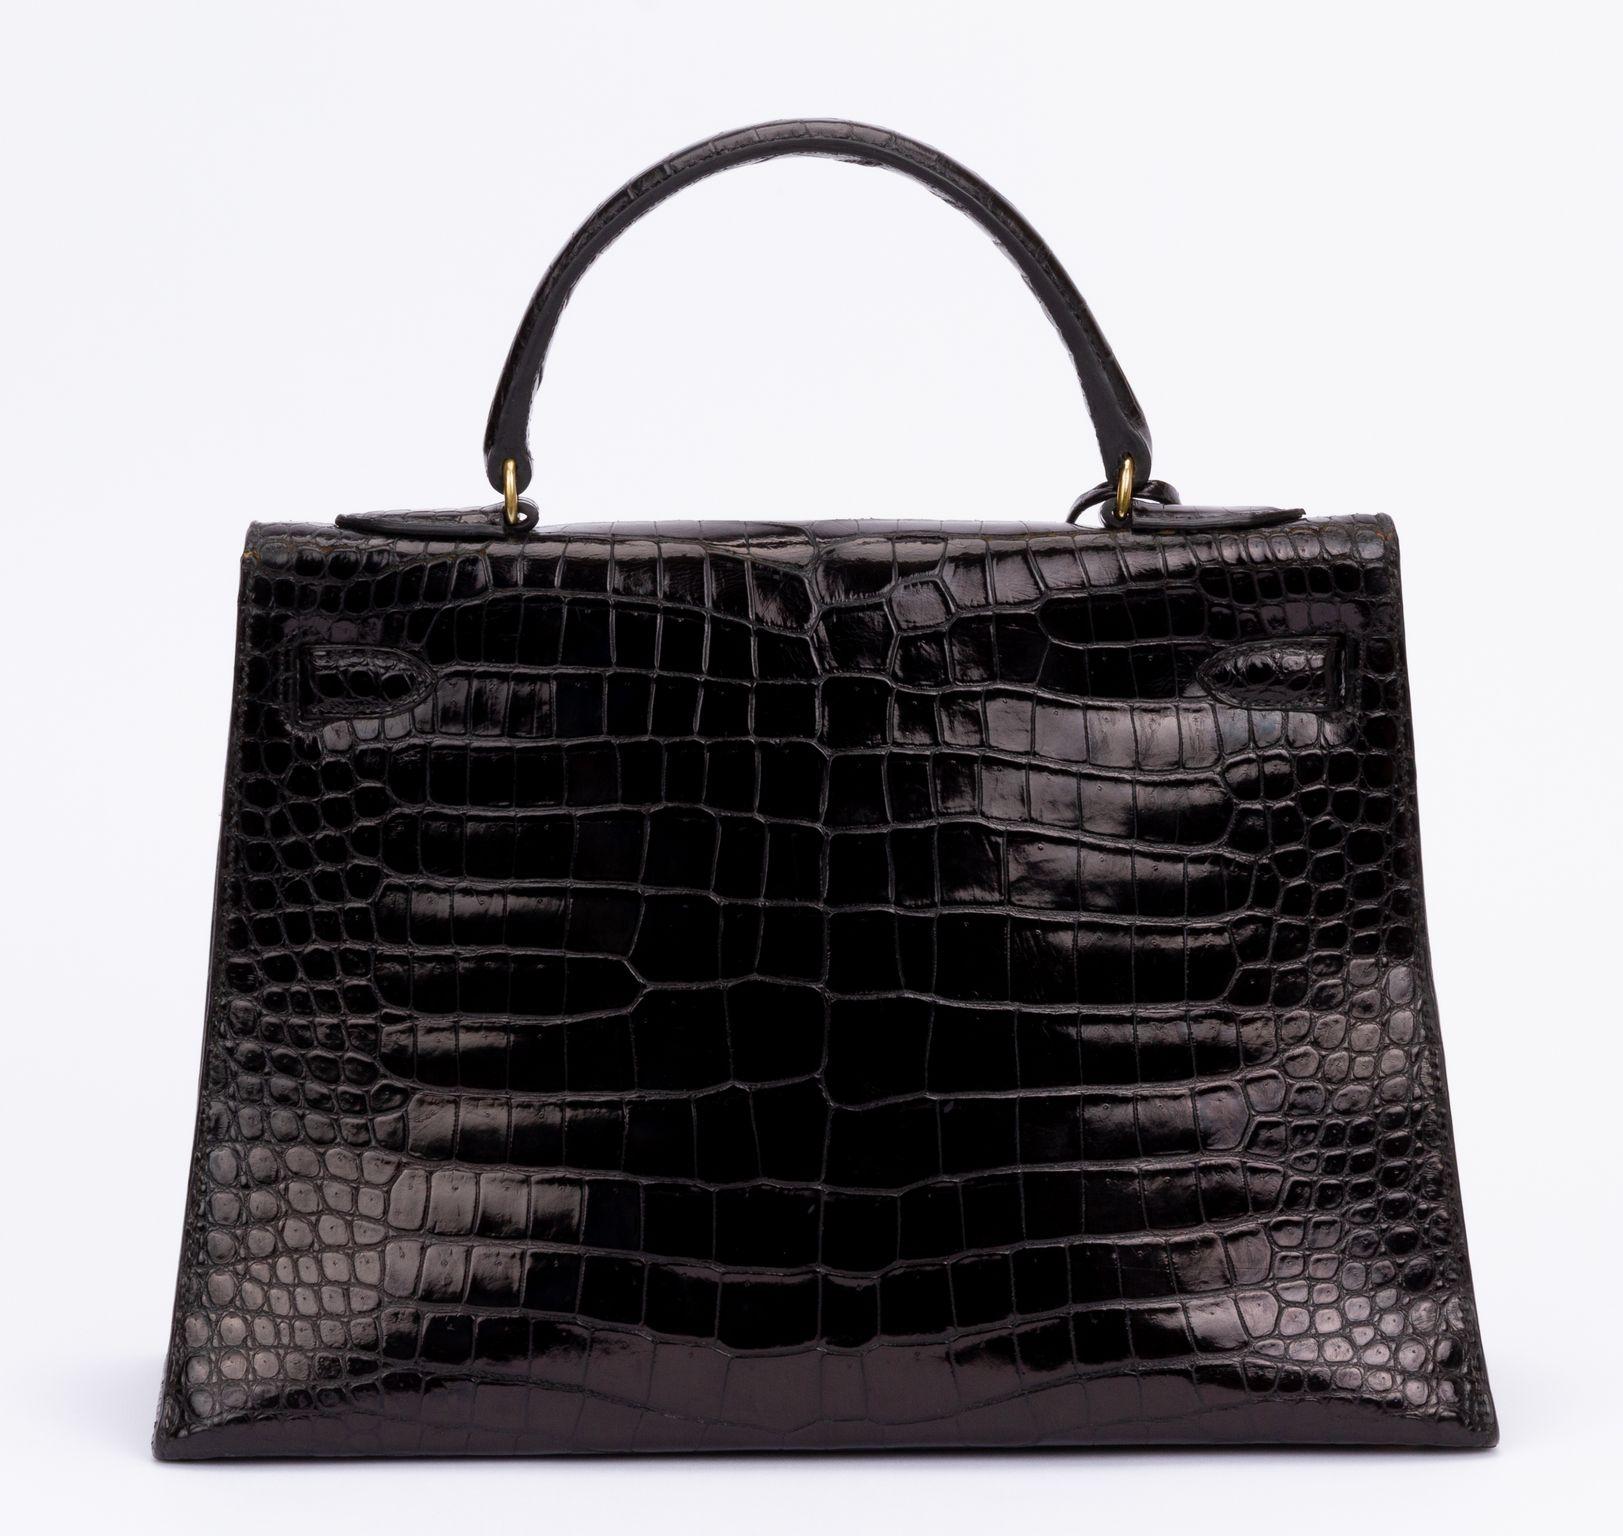 Hermès Black Crocodile Vintage Kelly Bag In Excellent Condition For Sale In West Hollywood, CA